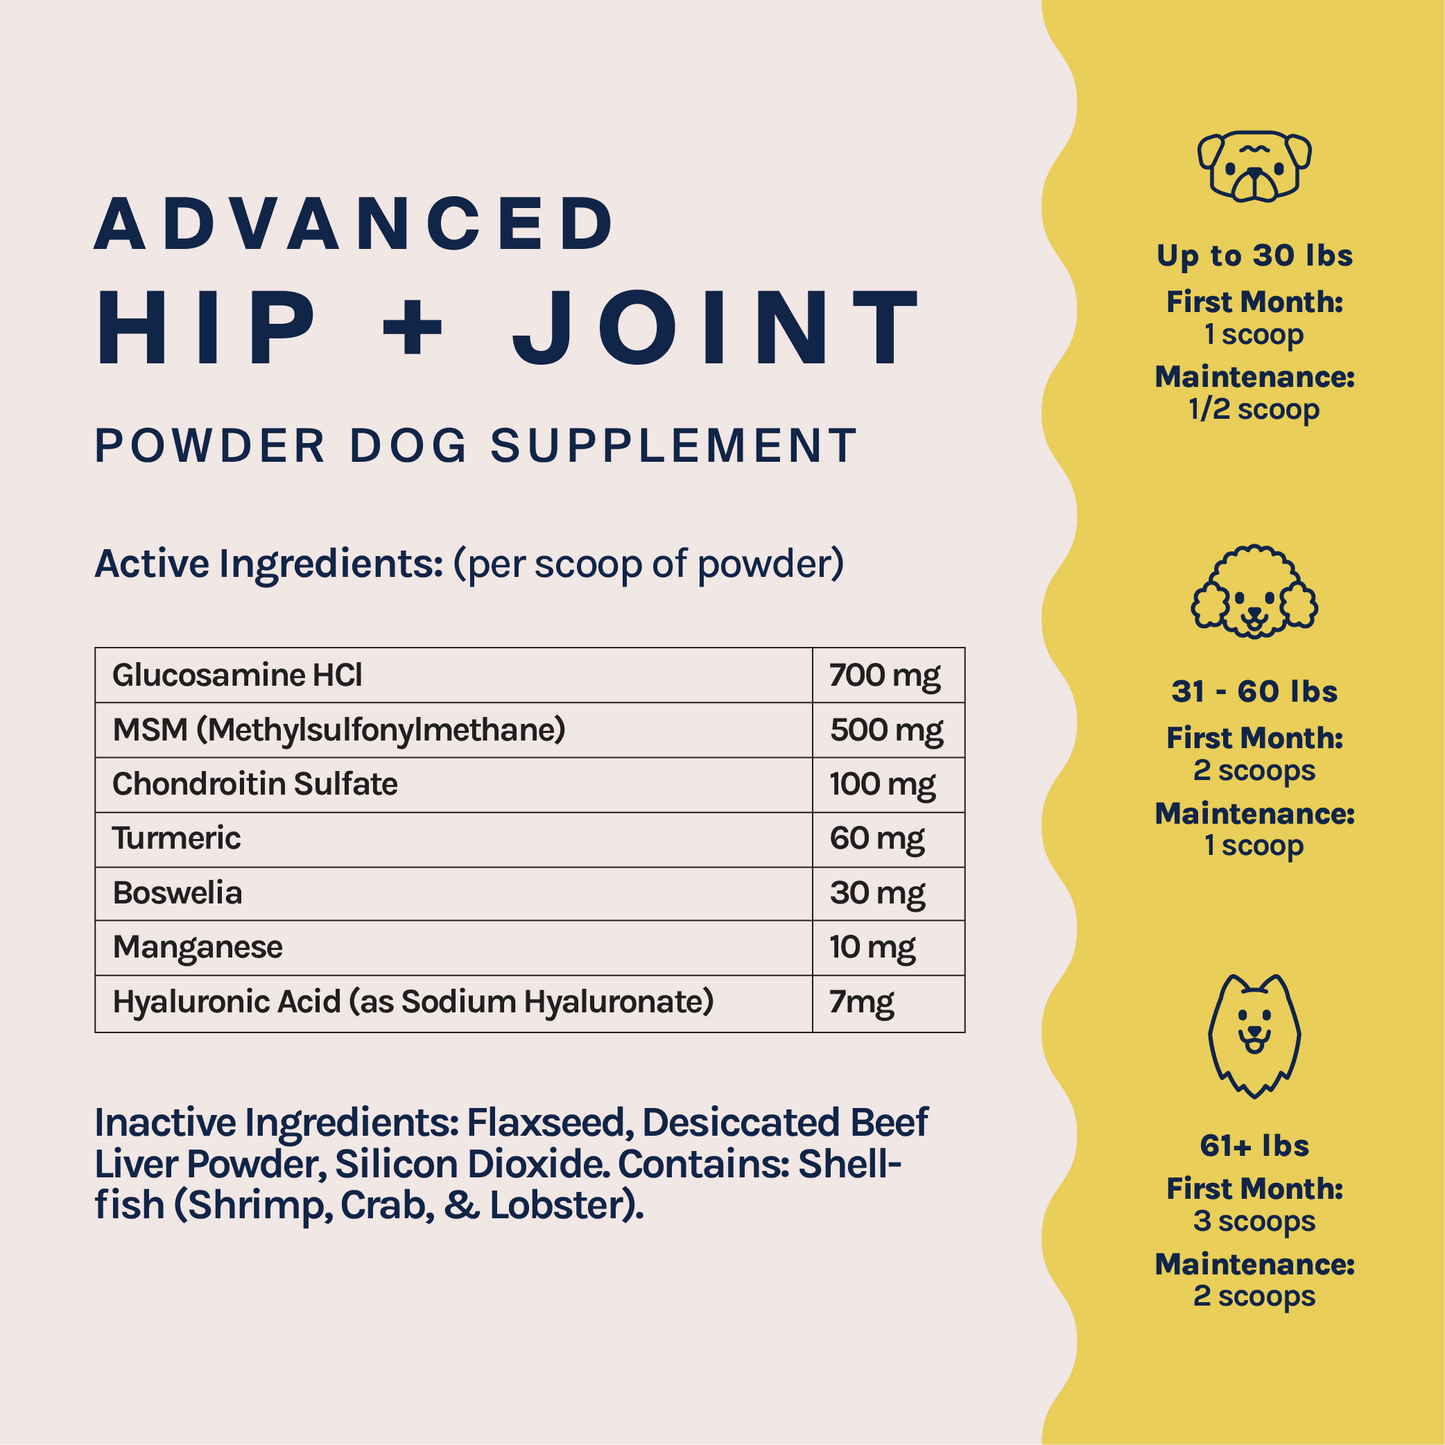 Advanced Hip + Joint Powder Dog Supplement